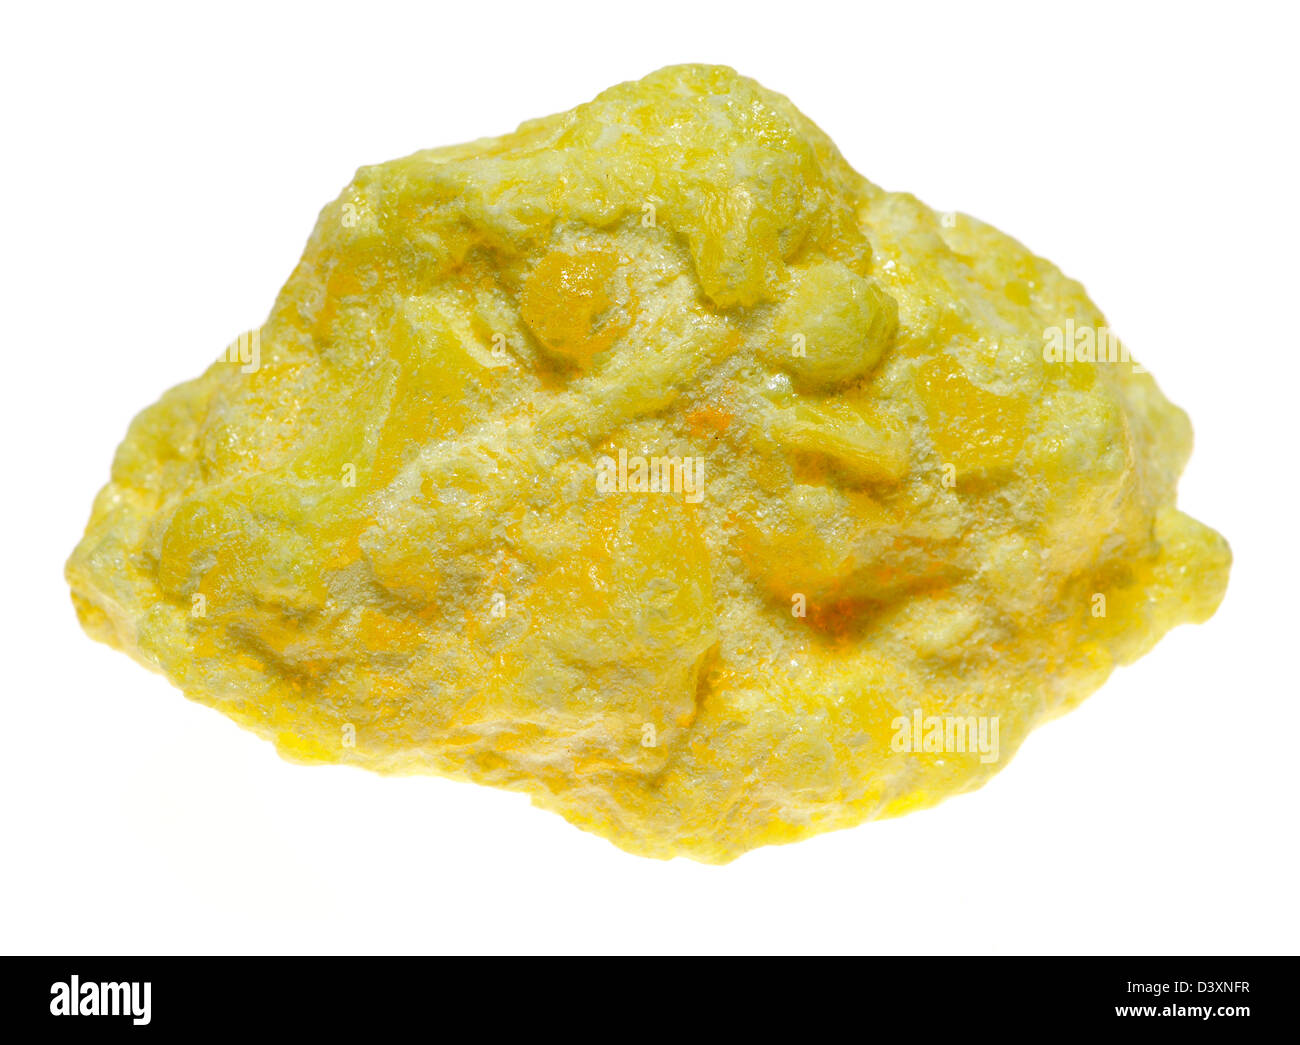 Sulphur / Sulfur sample, Bolivia. Stock Photo